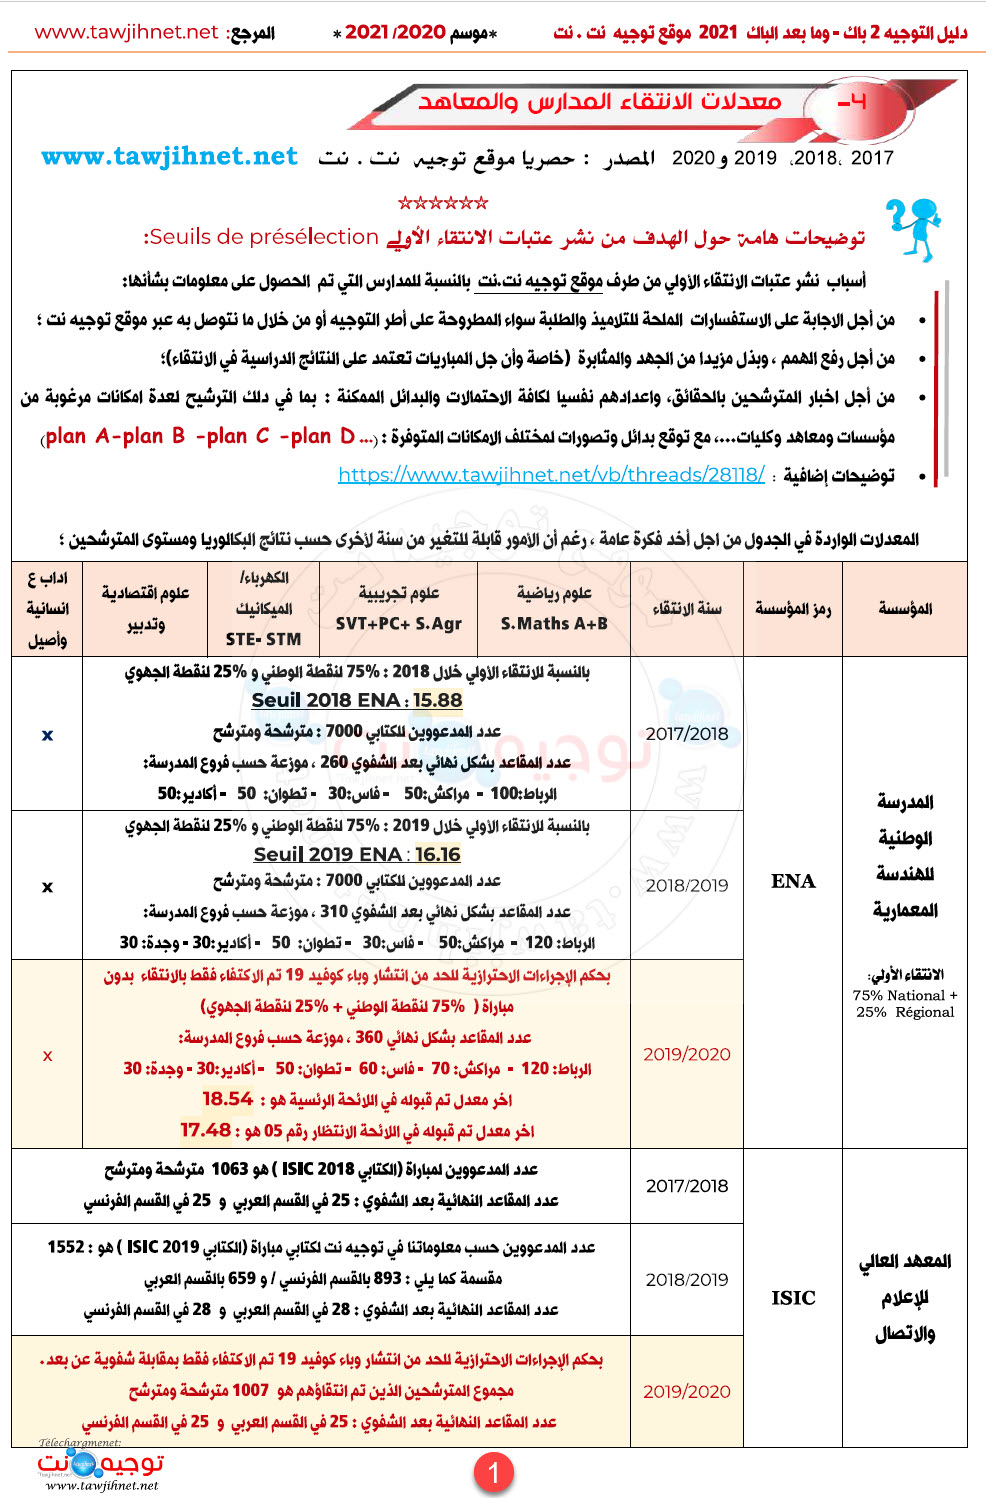 seuils-preselection-ecoles-instituts-maroc-2021_Page_1.jpg